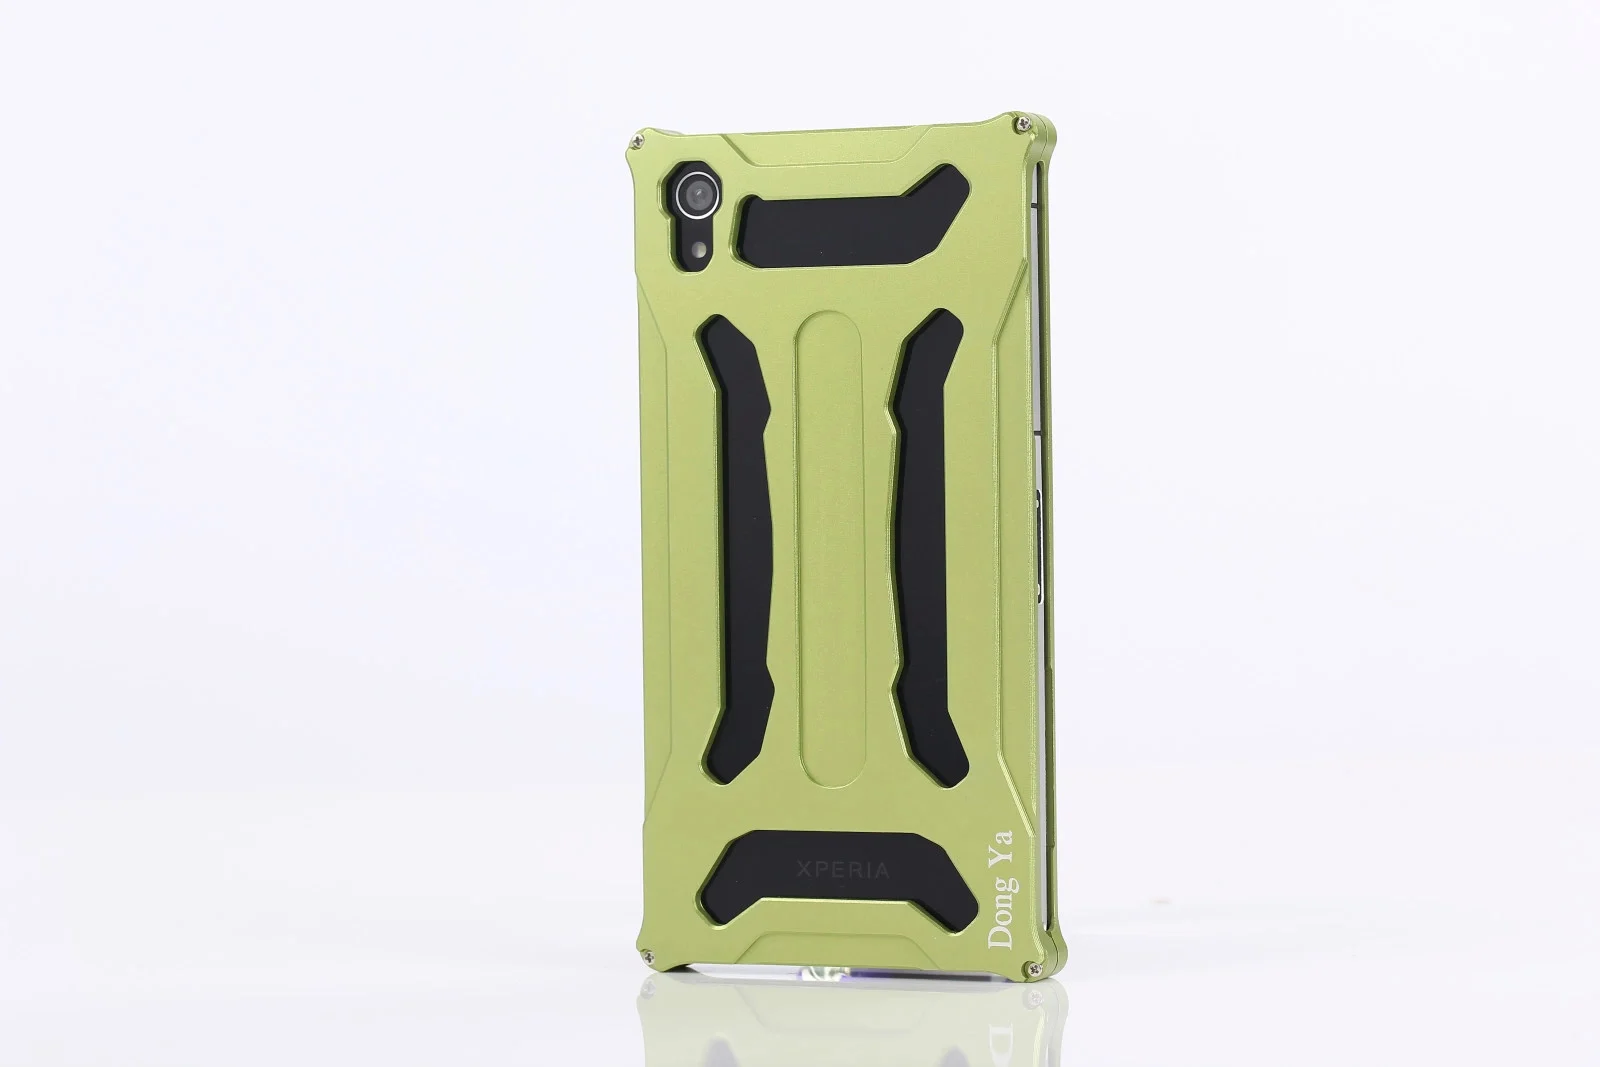 TX для Xperia Z2 металлический алюминиевый чехол-накладка для sony Xperia Z2 D6503 D6502 Передняя Задняя Защитная пленка с инструментами винты - Цвет: Зеленый